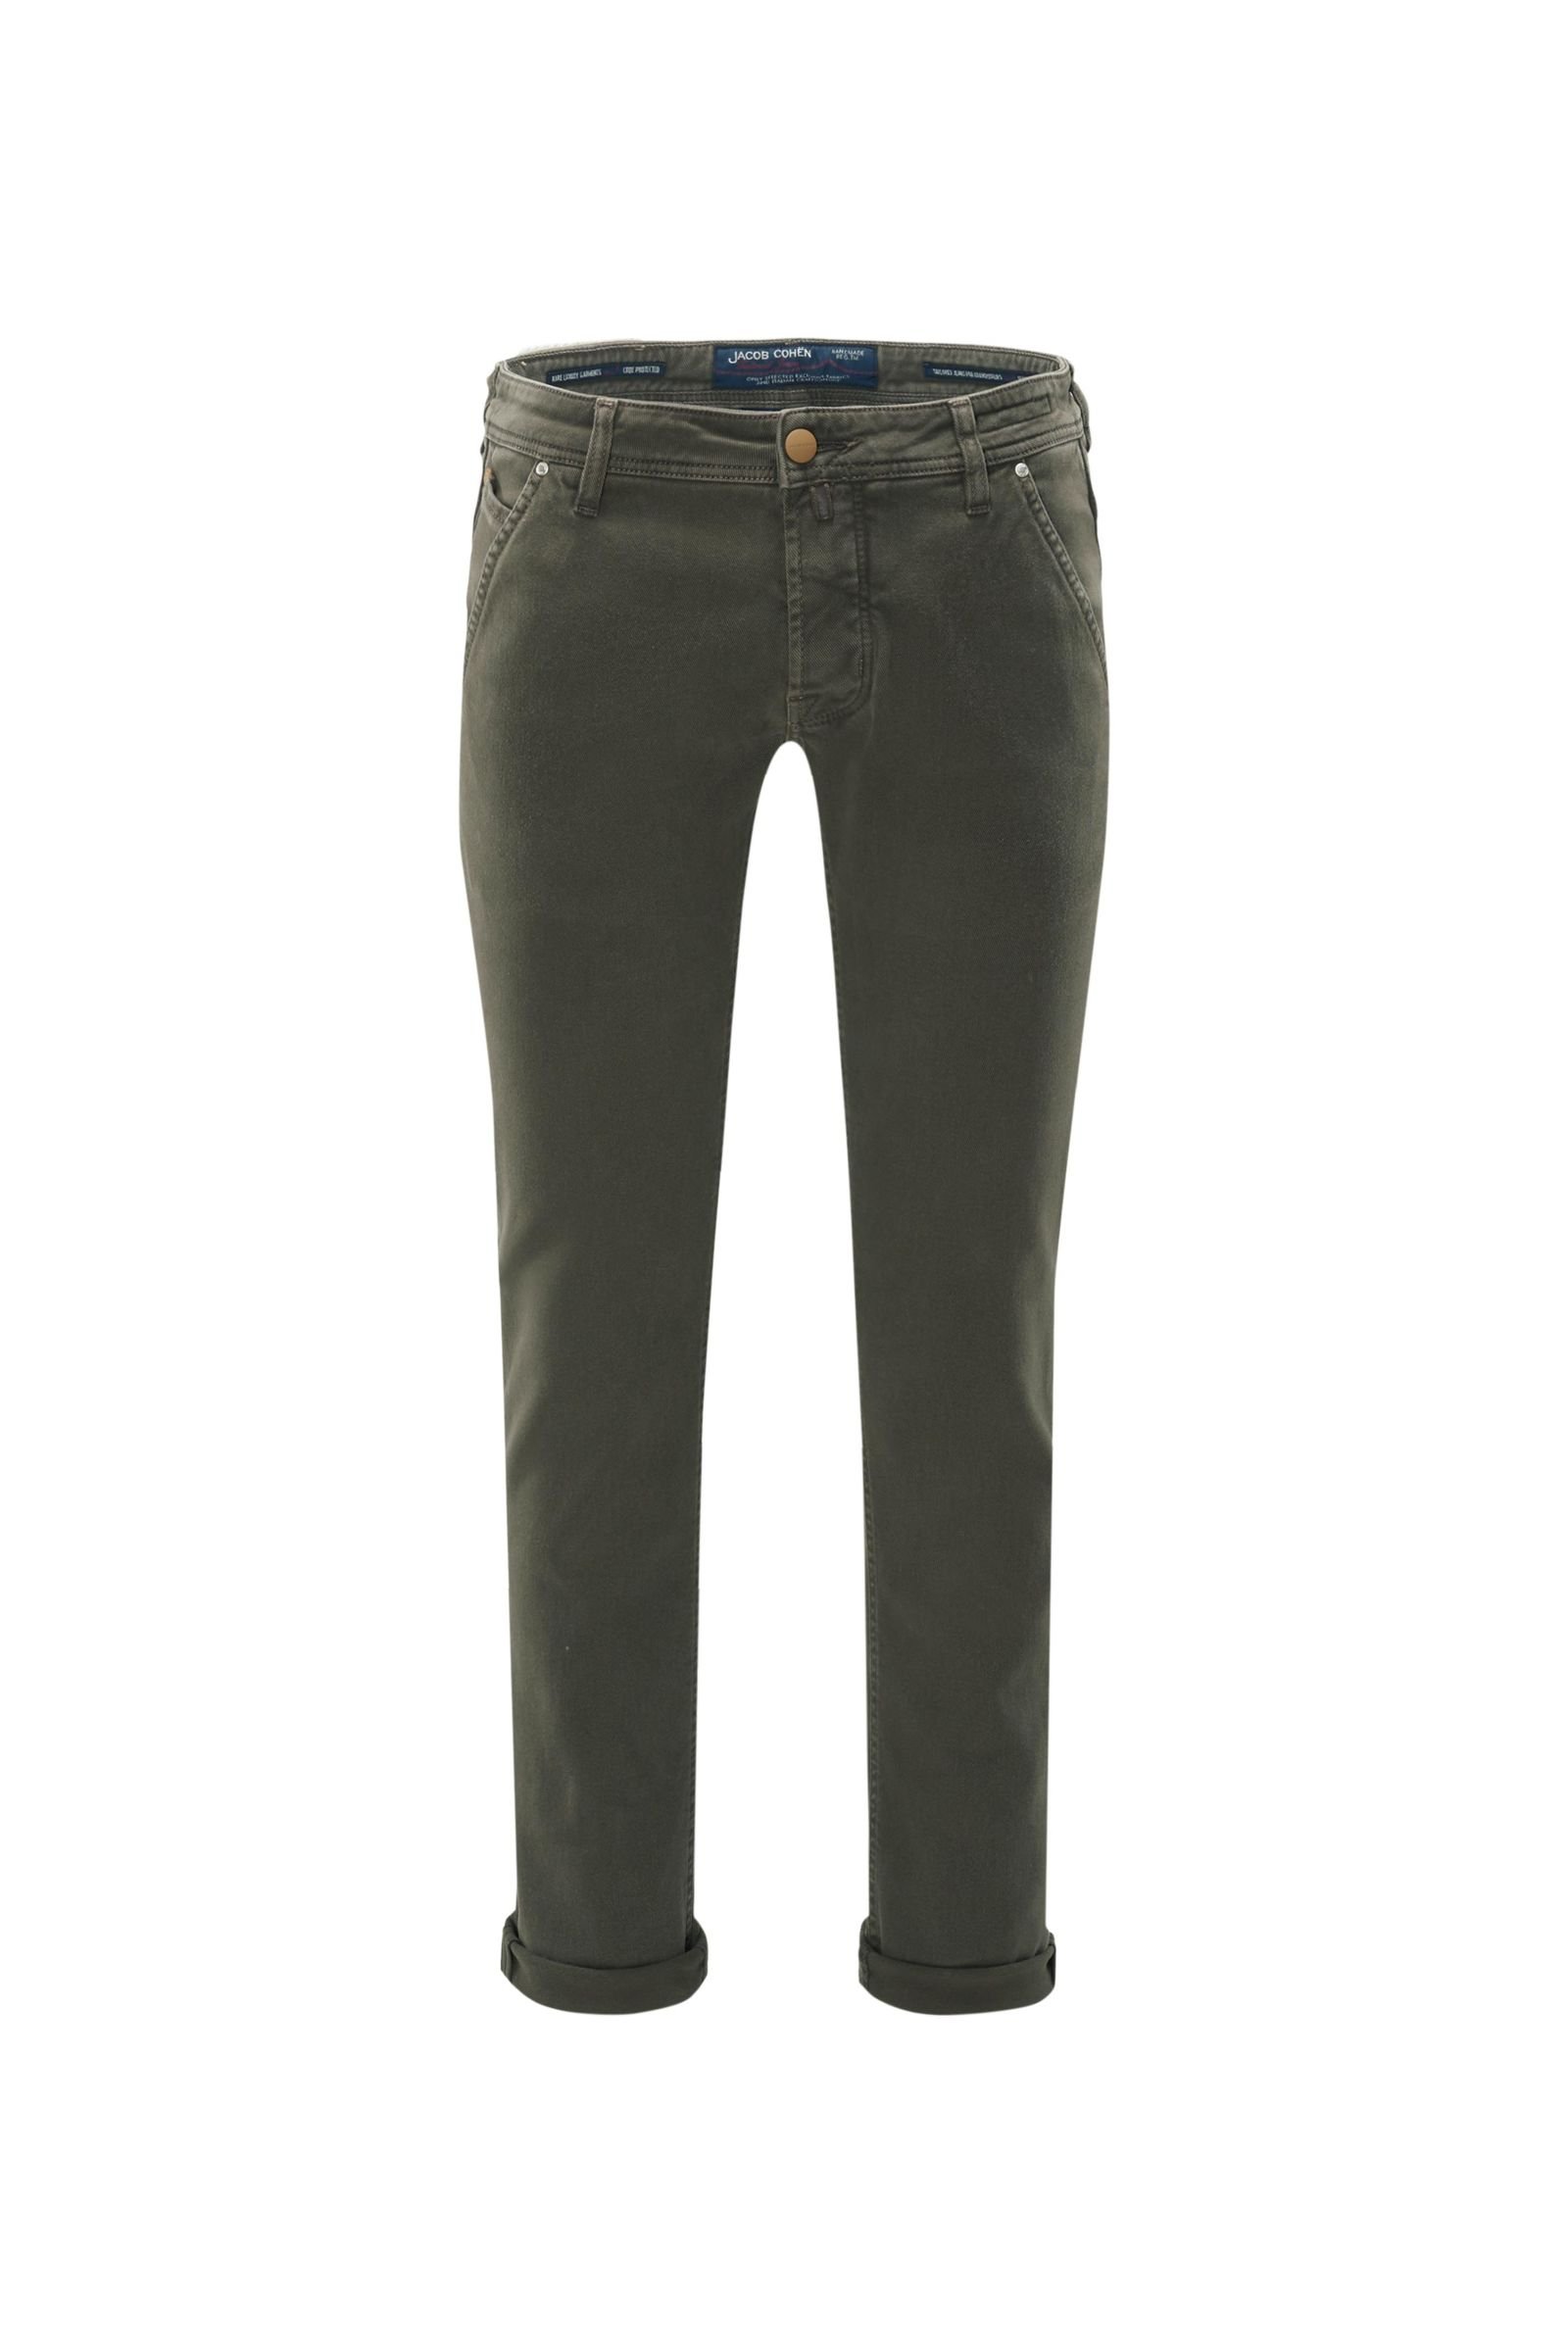 Cotton trousers 'J613 Comfort Vintage Slim Fit' brown